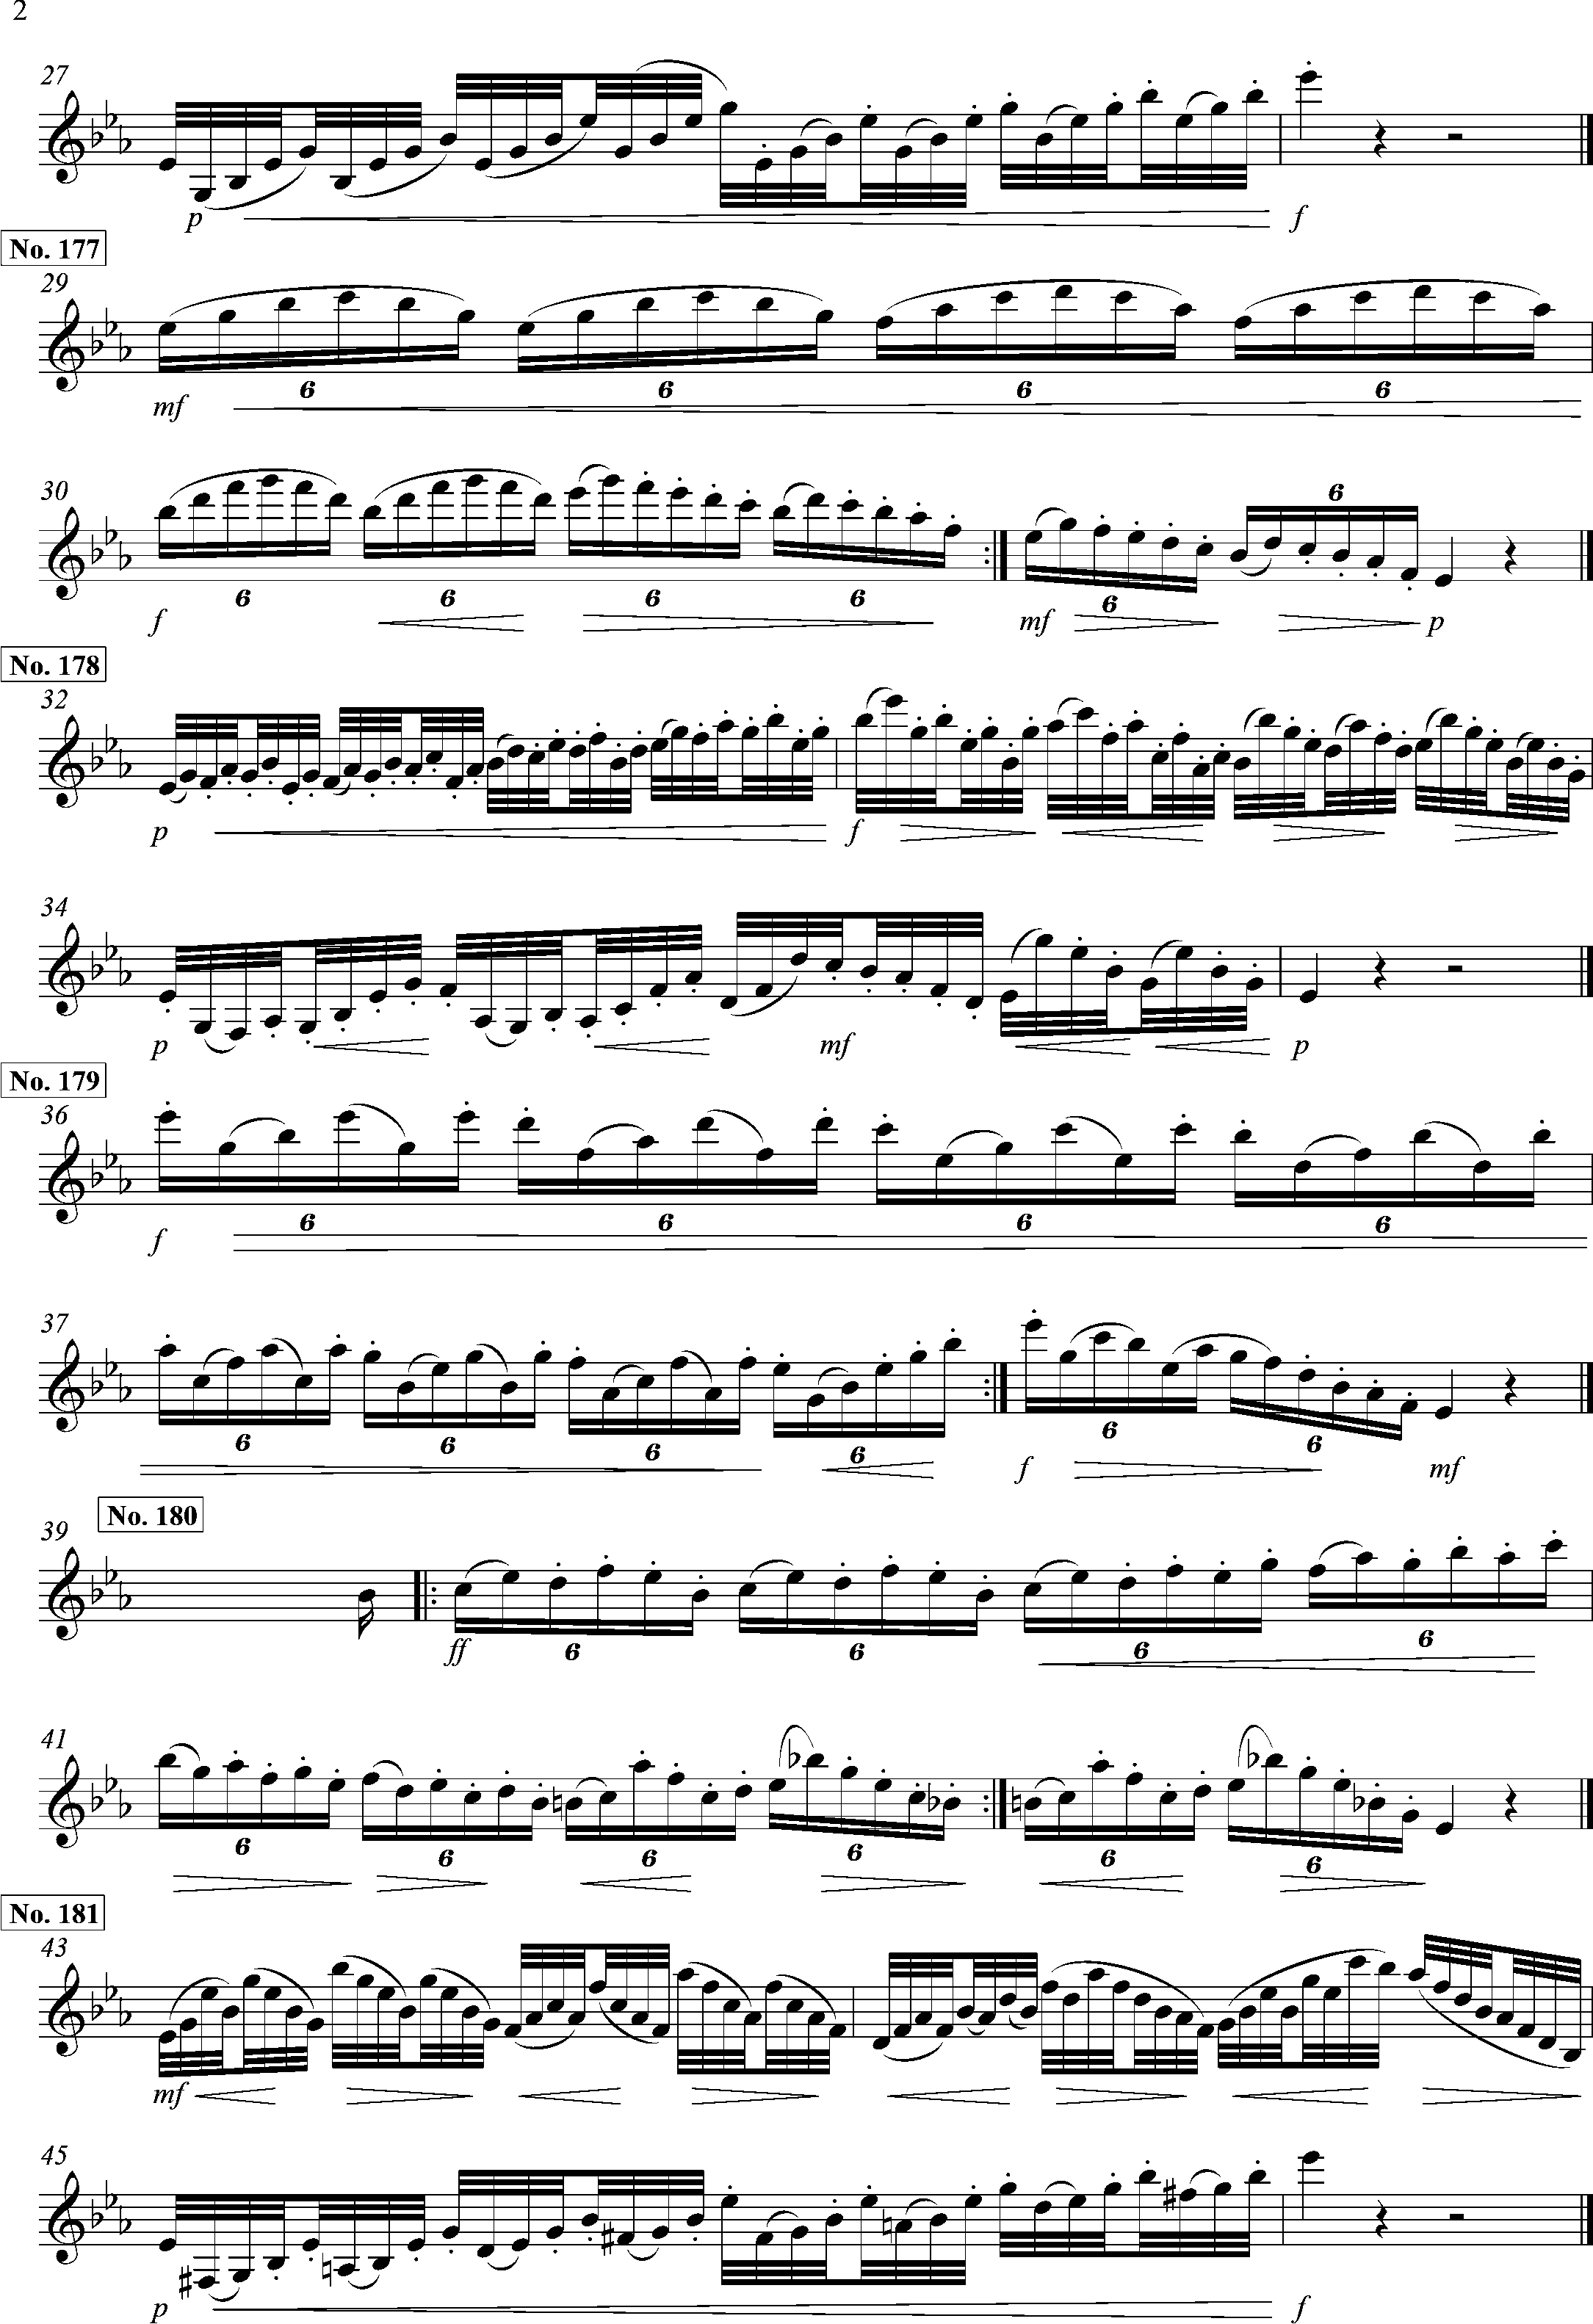 416 etüden, kröpsch, Es-Dur,page 2